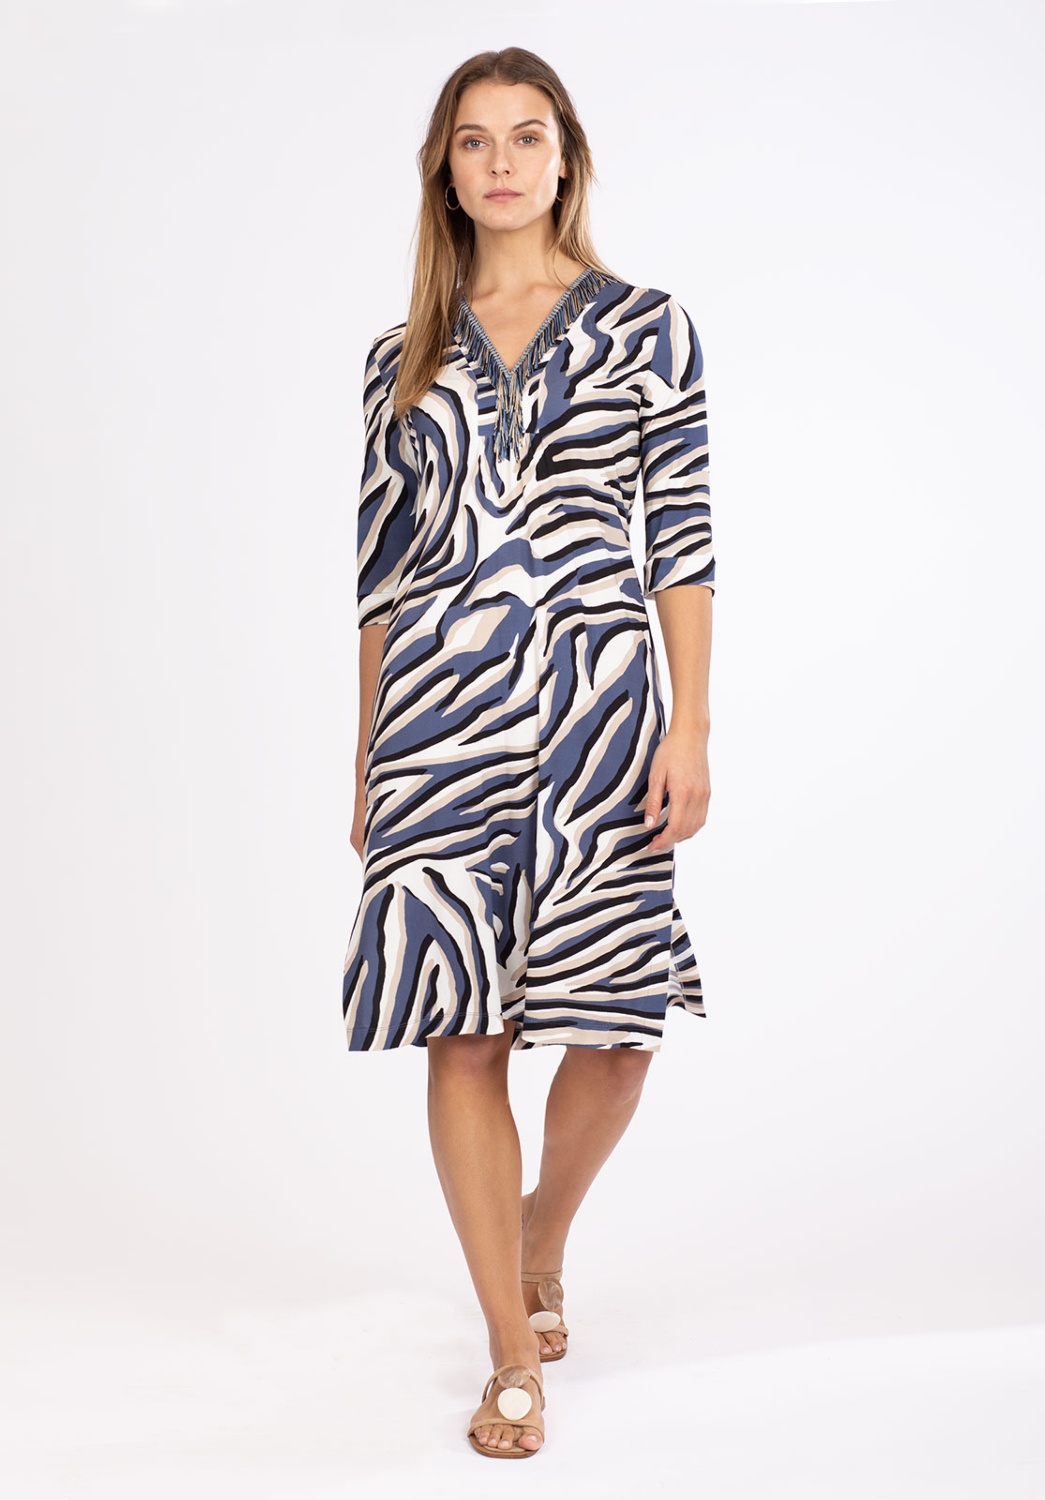 Fringed Zebra Dress 